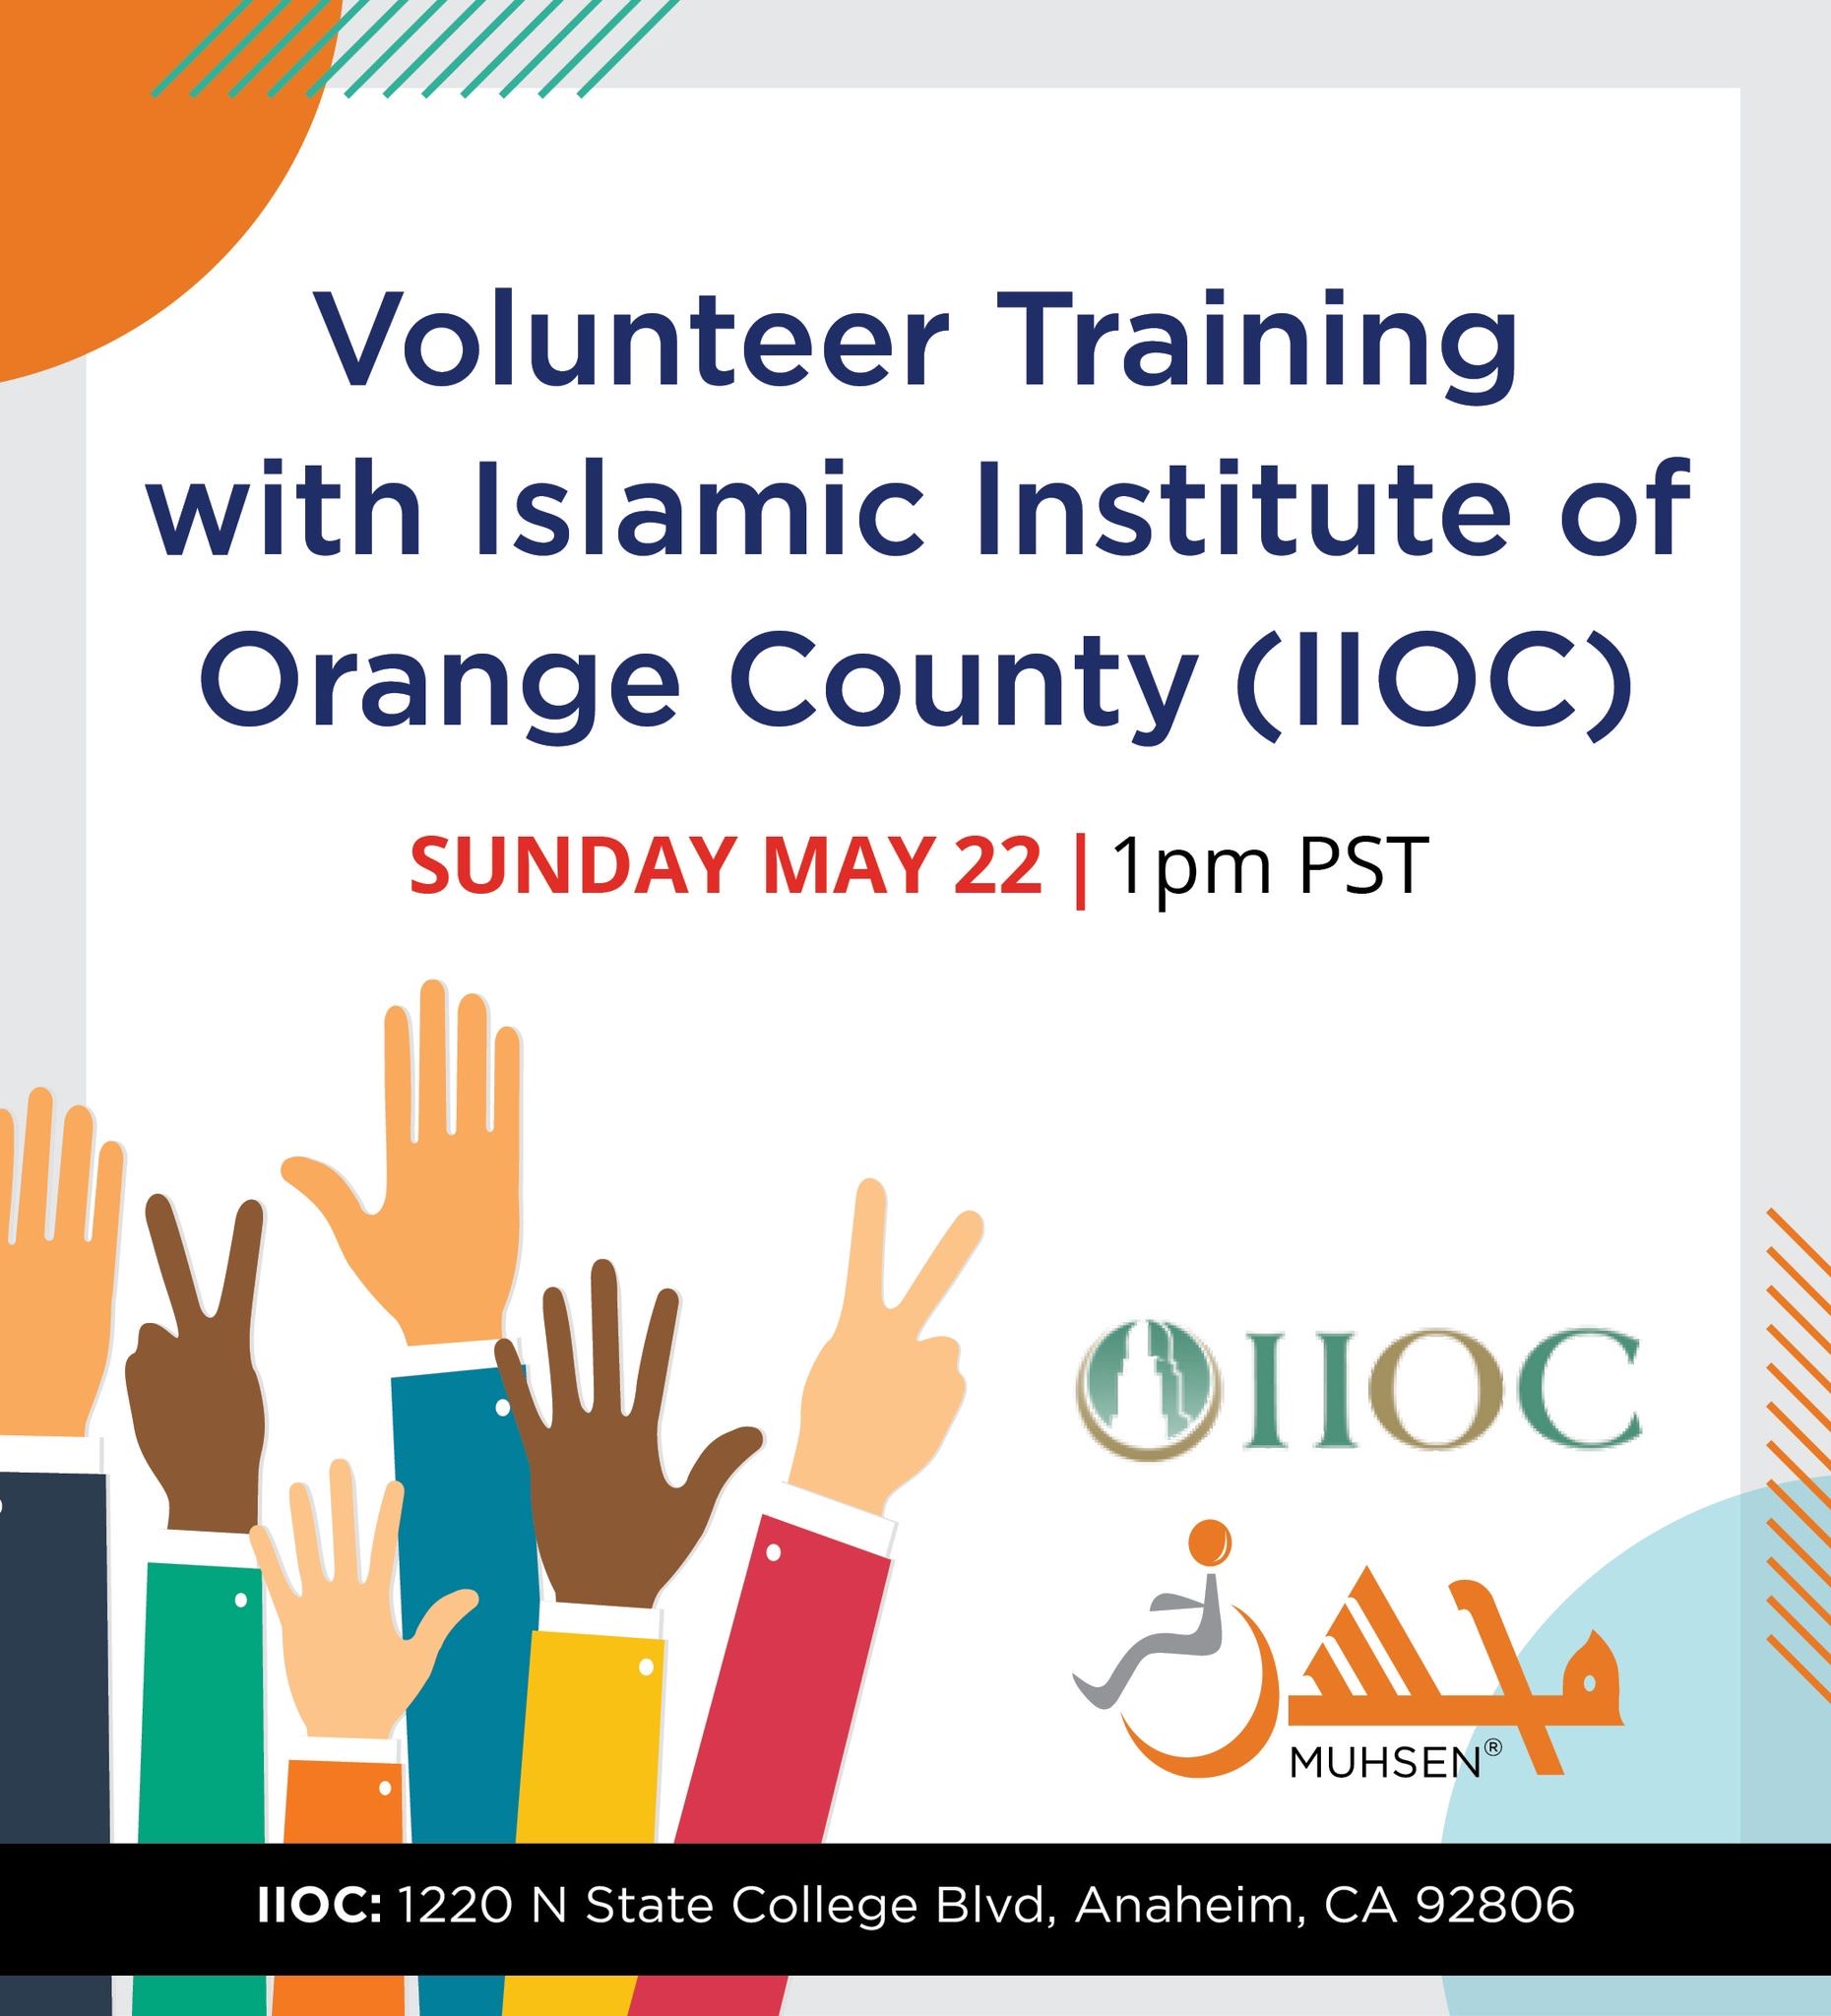 Volunteer Training with Islamic Institute of Orange County Sunday May 22nd 1PM PST. IIOC logo and Muhsen logo.